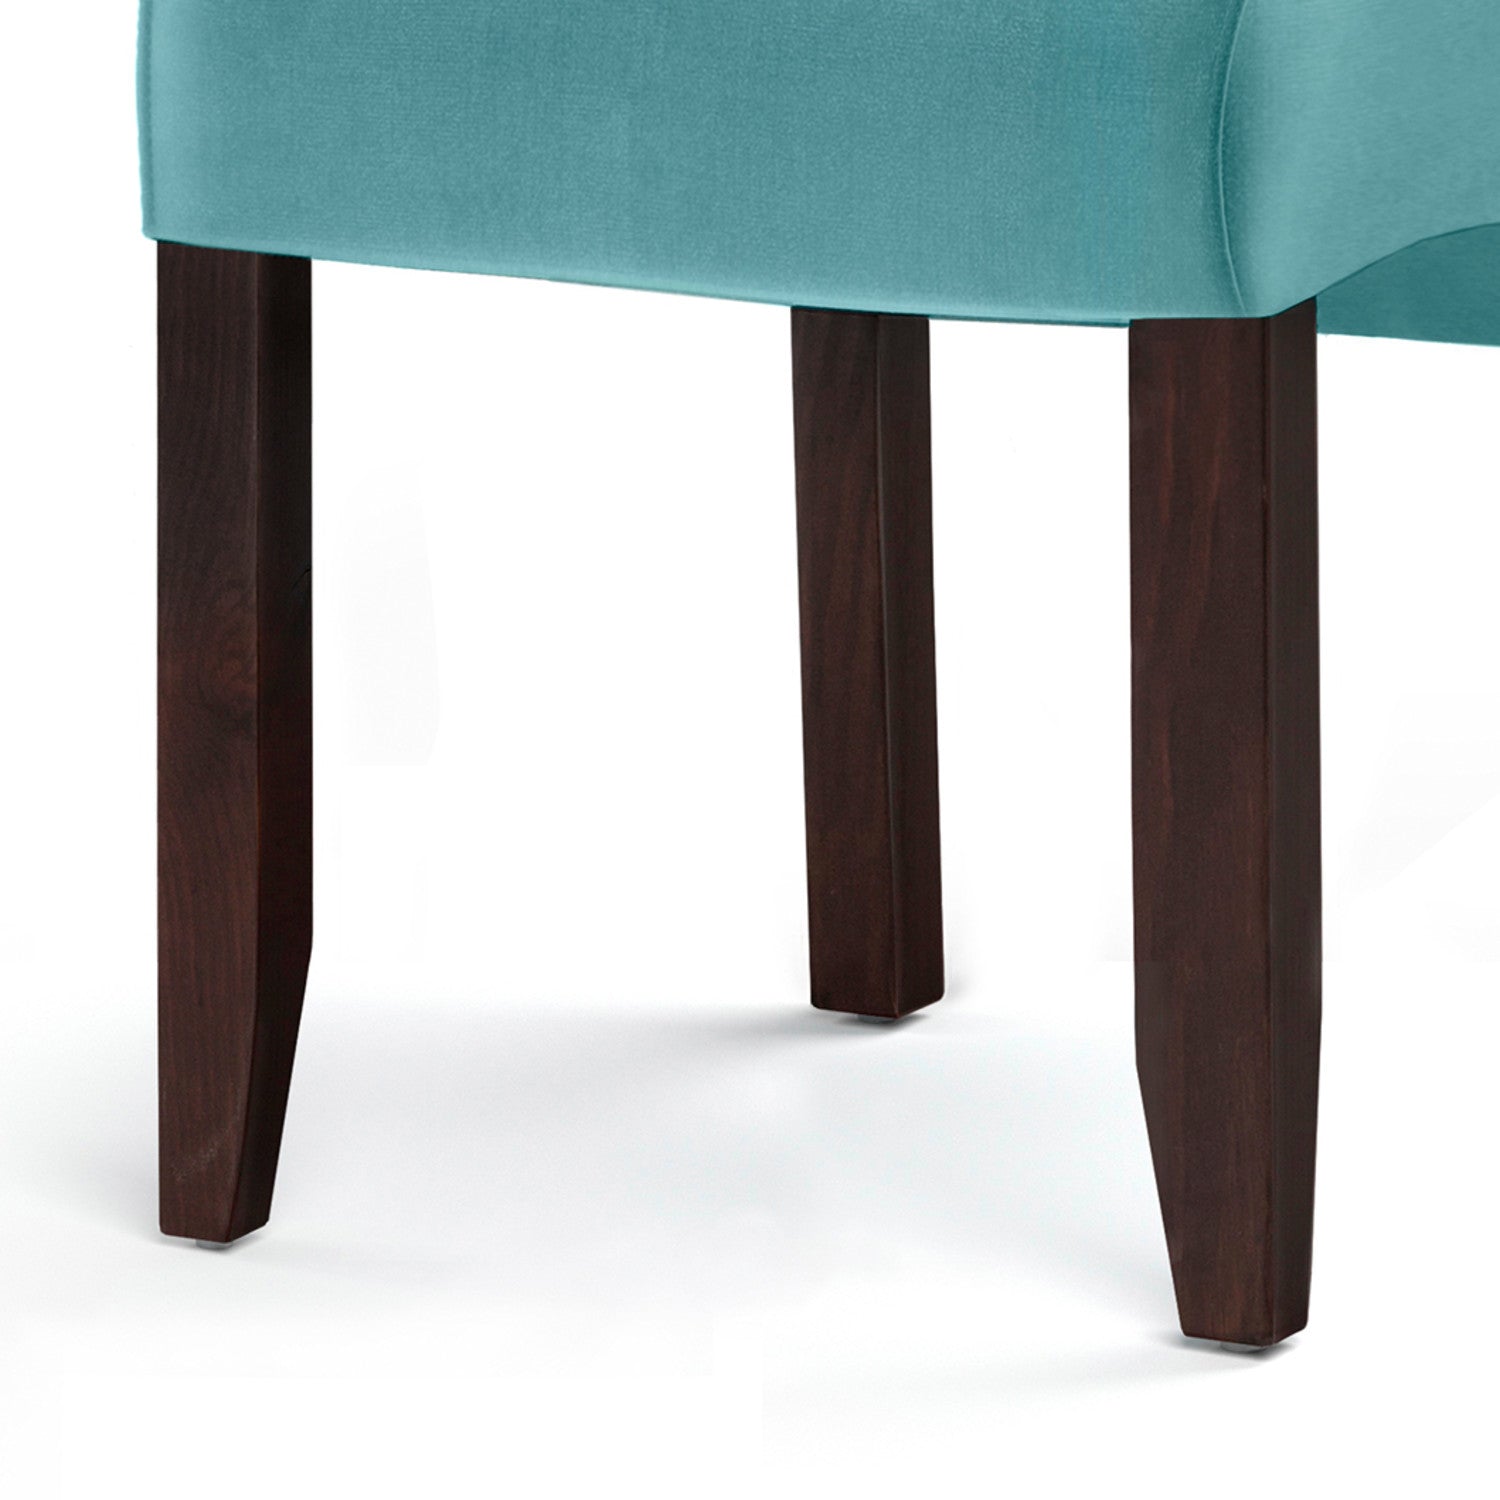 Aqua Velvet Fabric | Cosmopolitan Dining Chair in Velvet Fabric